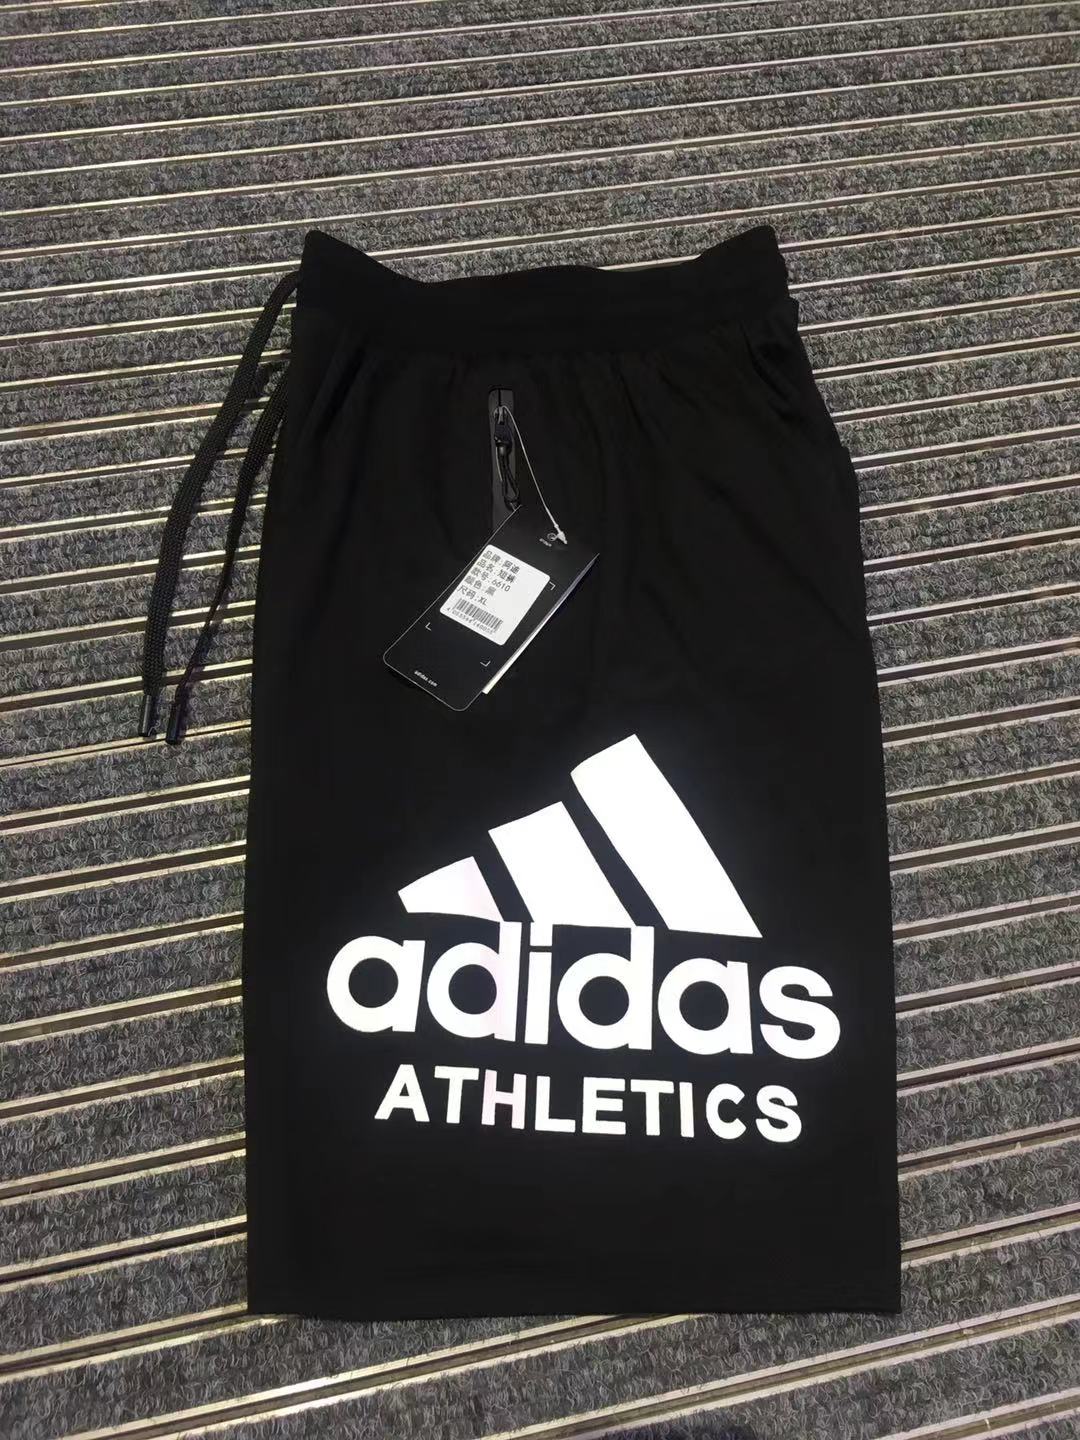 Adidas Men Loose Breathable Fitness Running Basketball Training Shorts Sports Pants